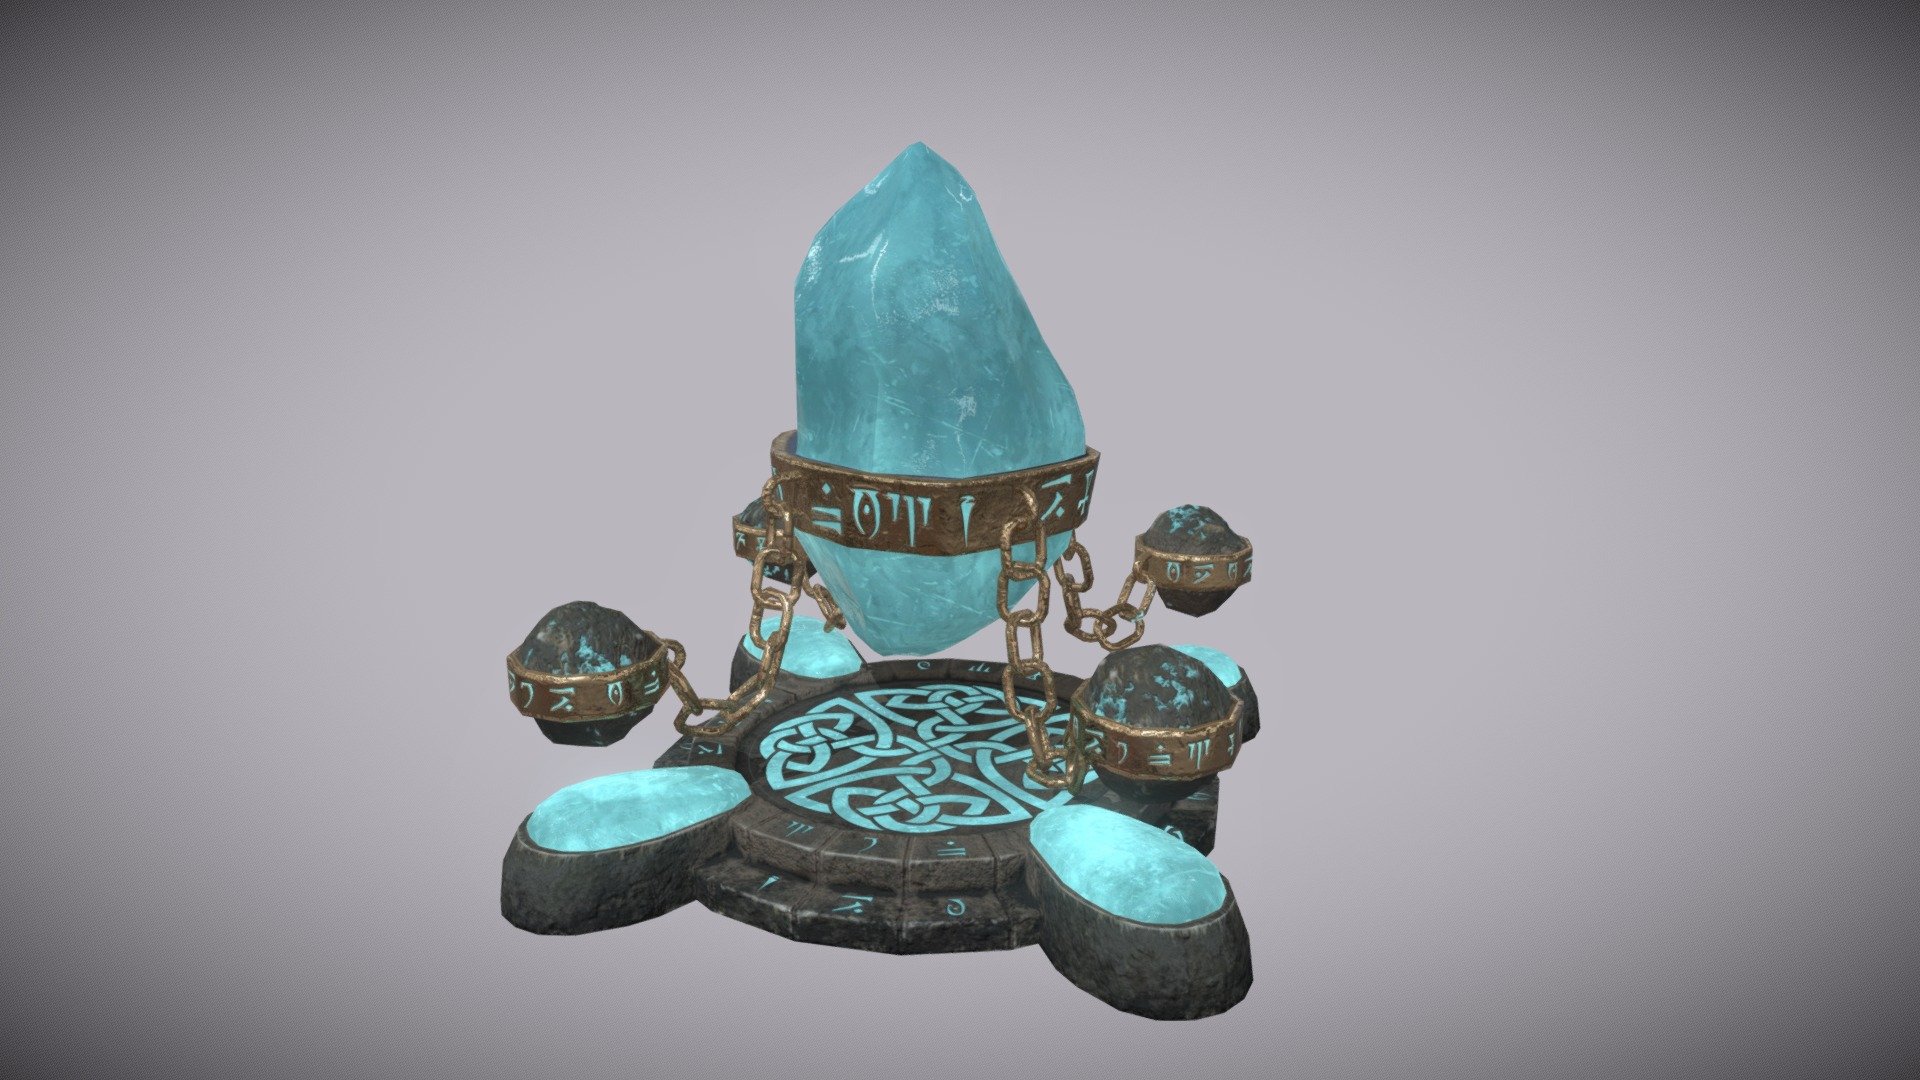 Magic rune crystal.
Gameready model.
2k textures 3d model